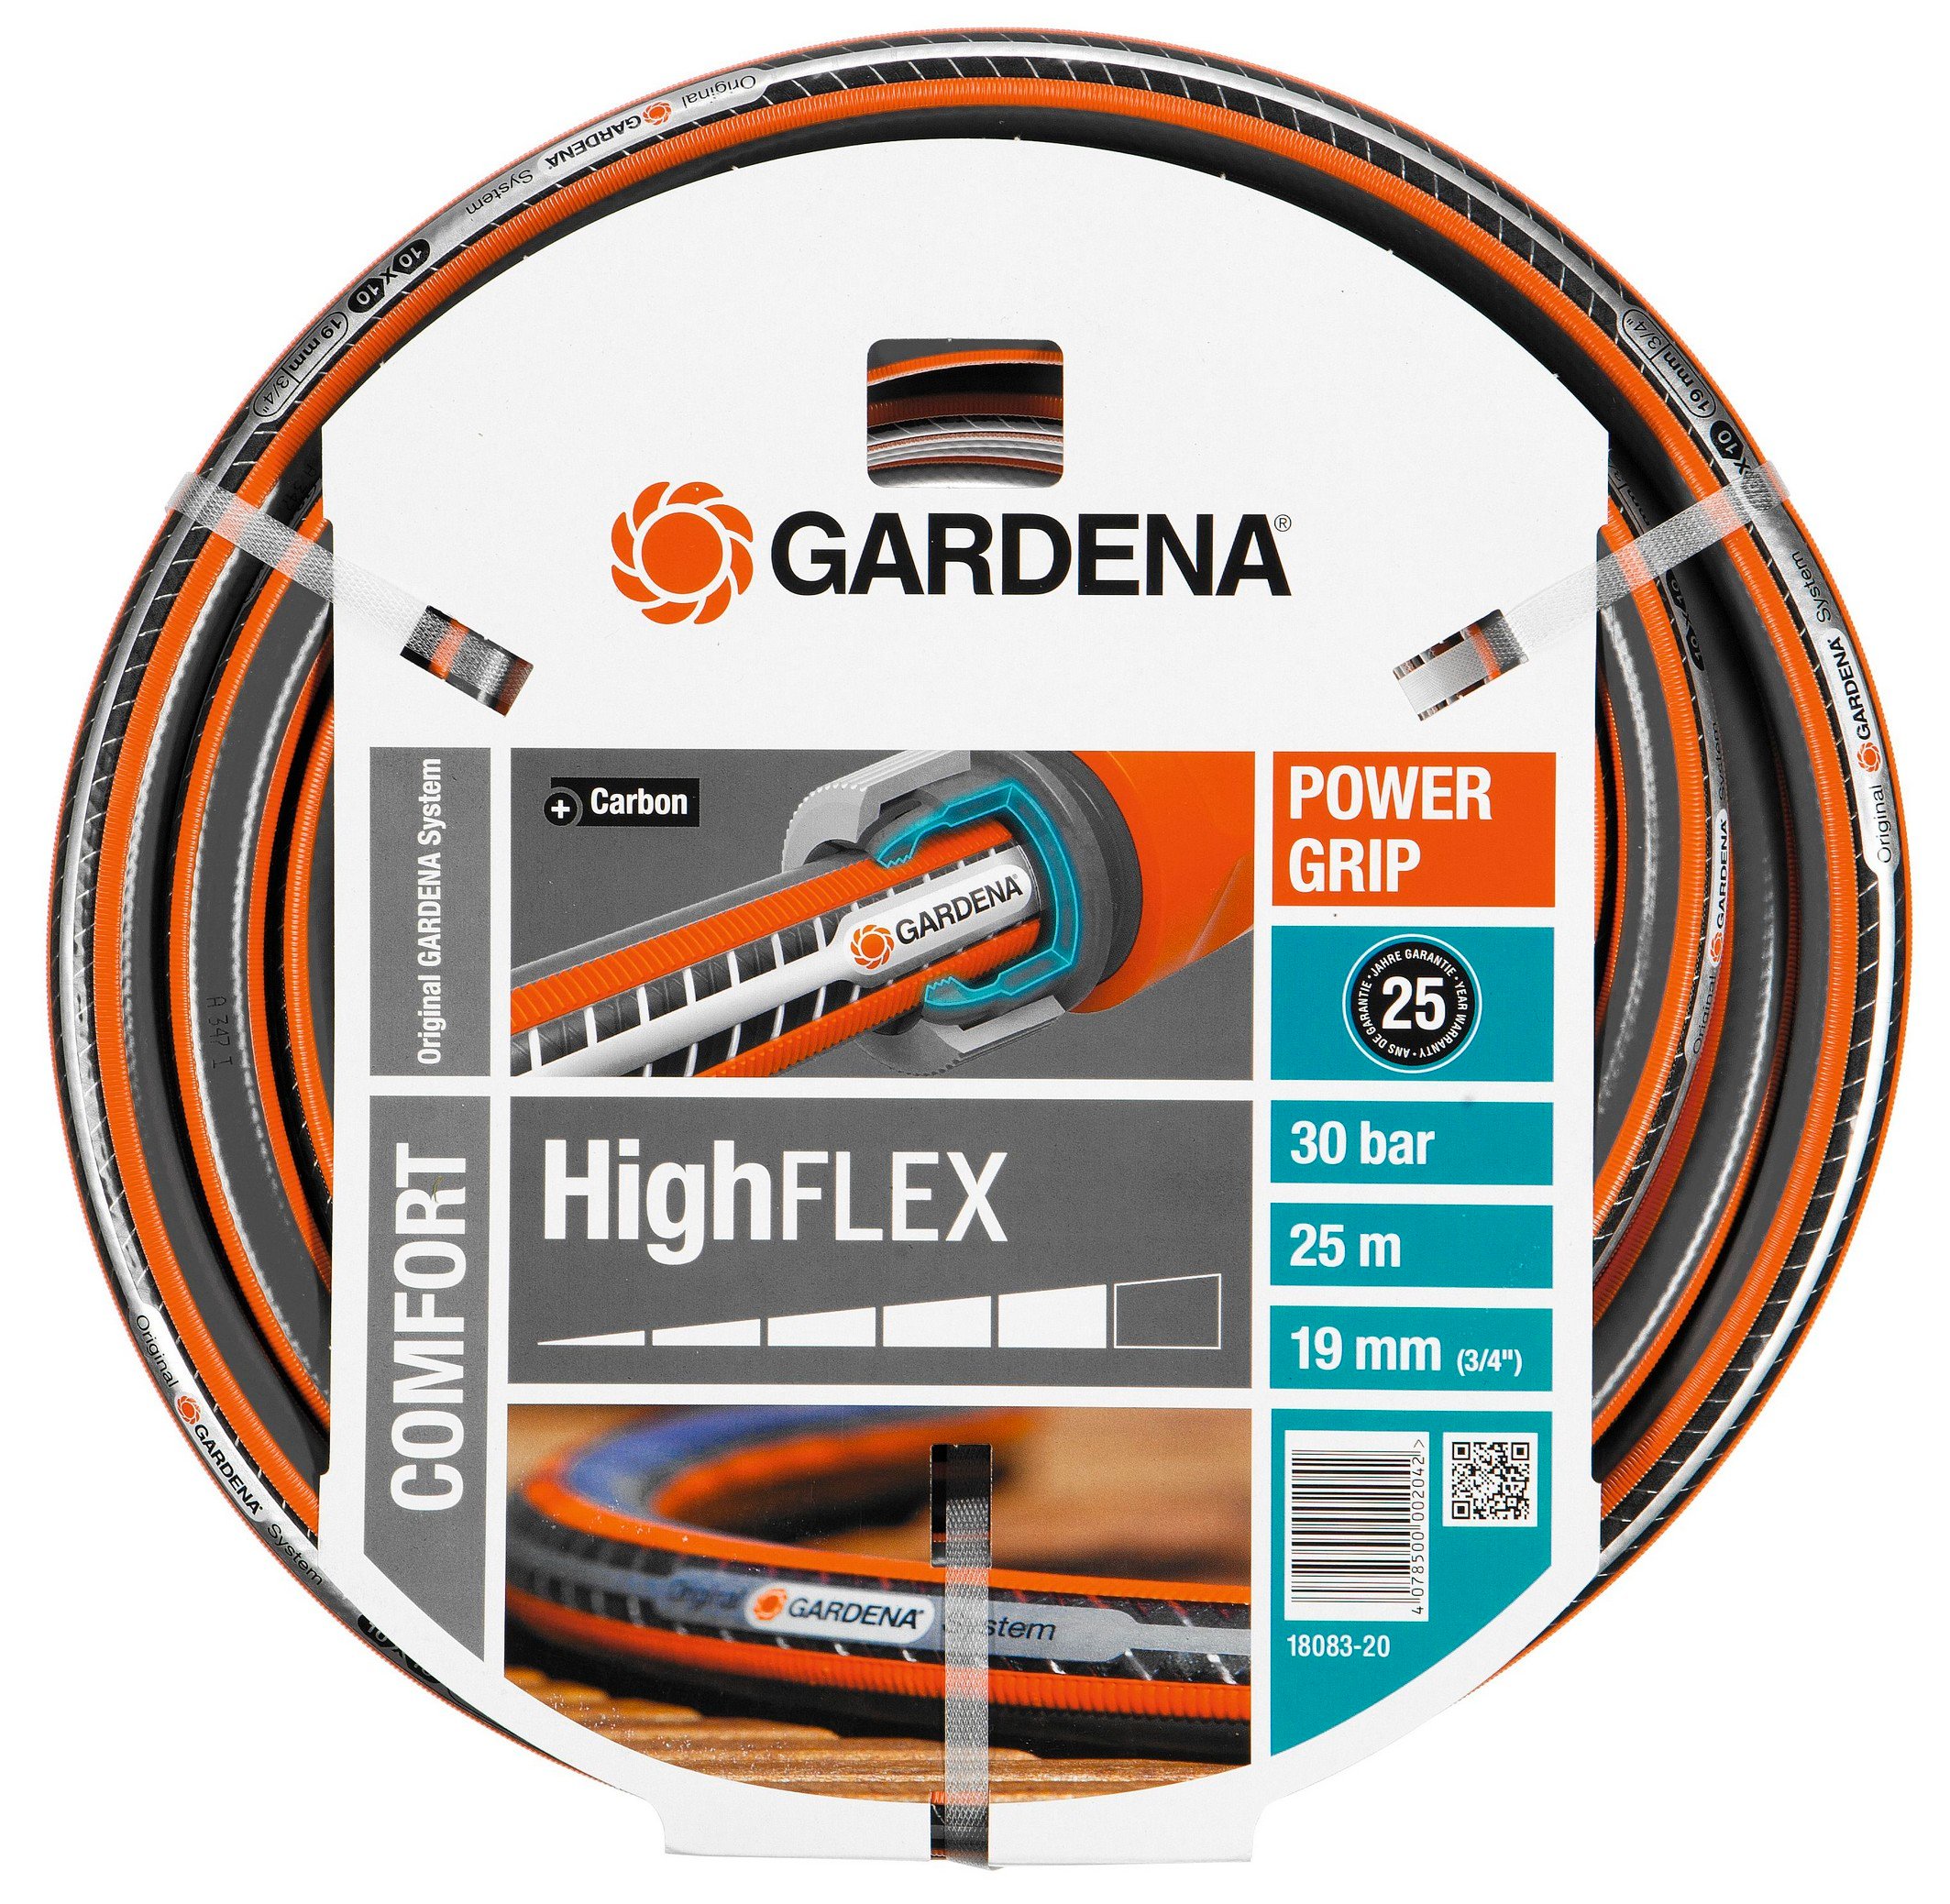 Gardena 18083-20 hadice Comfort HighFLEX 10 × 10 (3/4") 25 m bez armatur